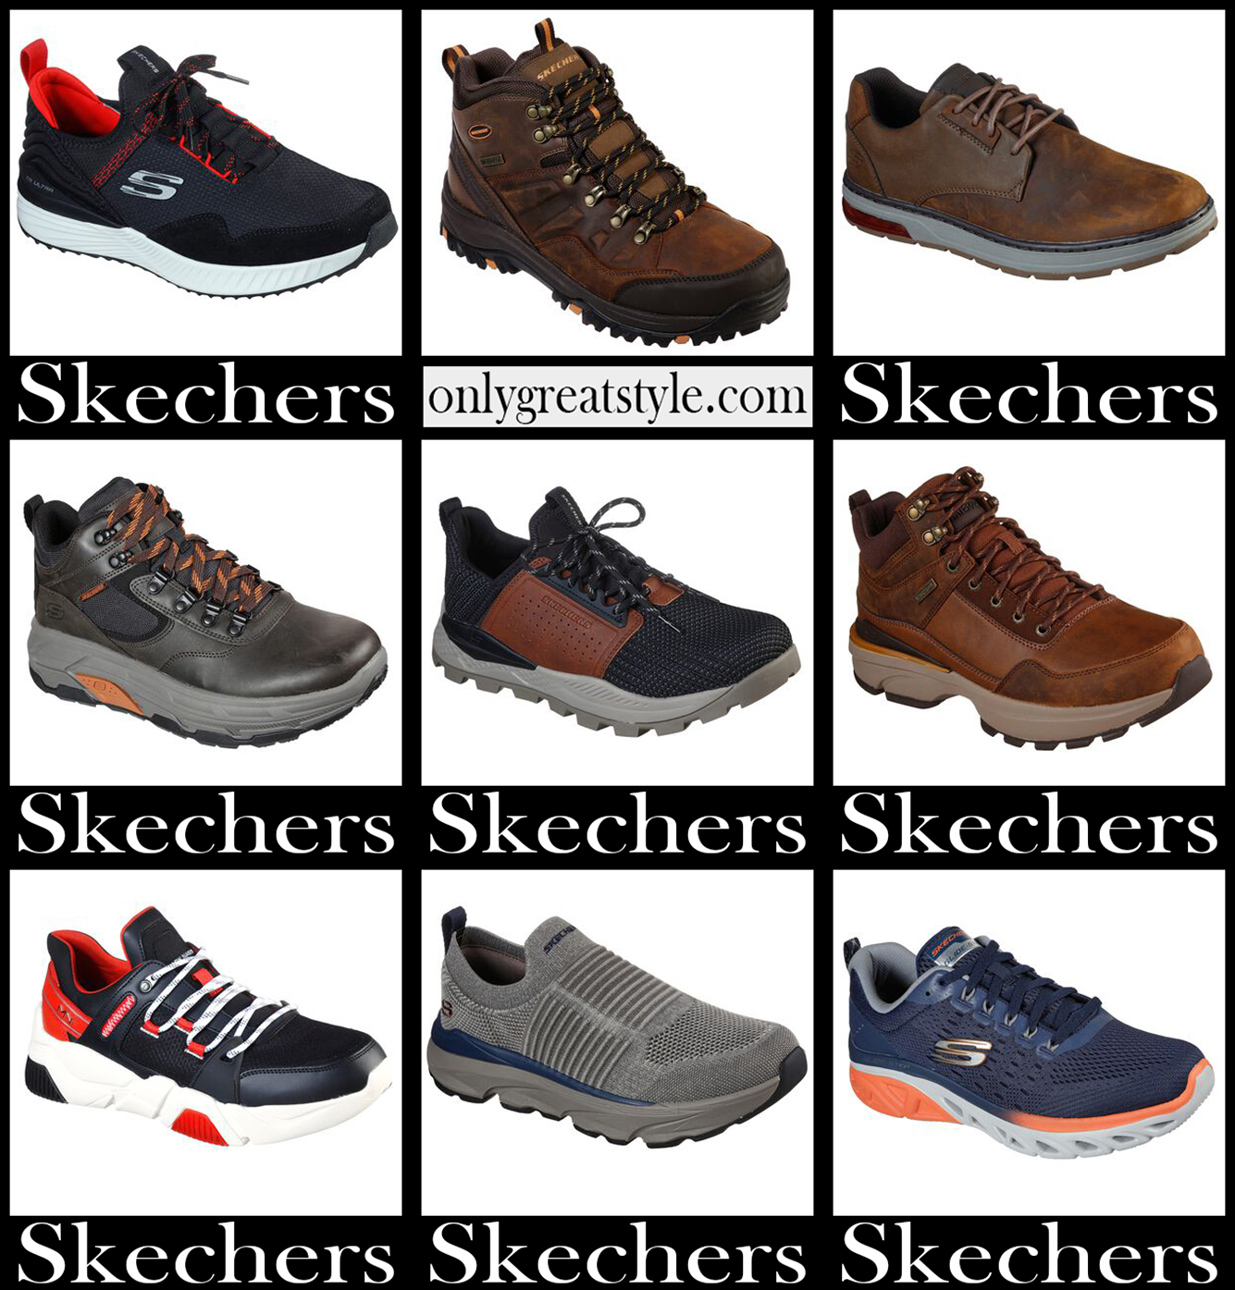 skechers shoes skechers shoes